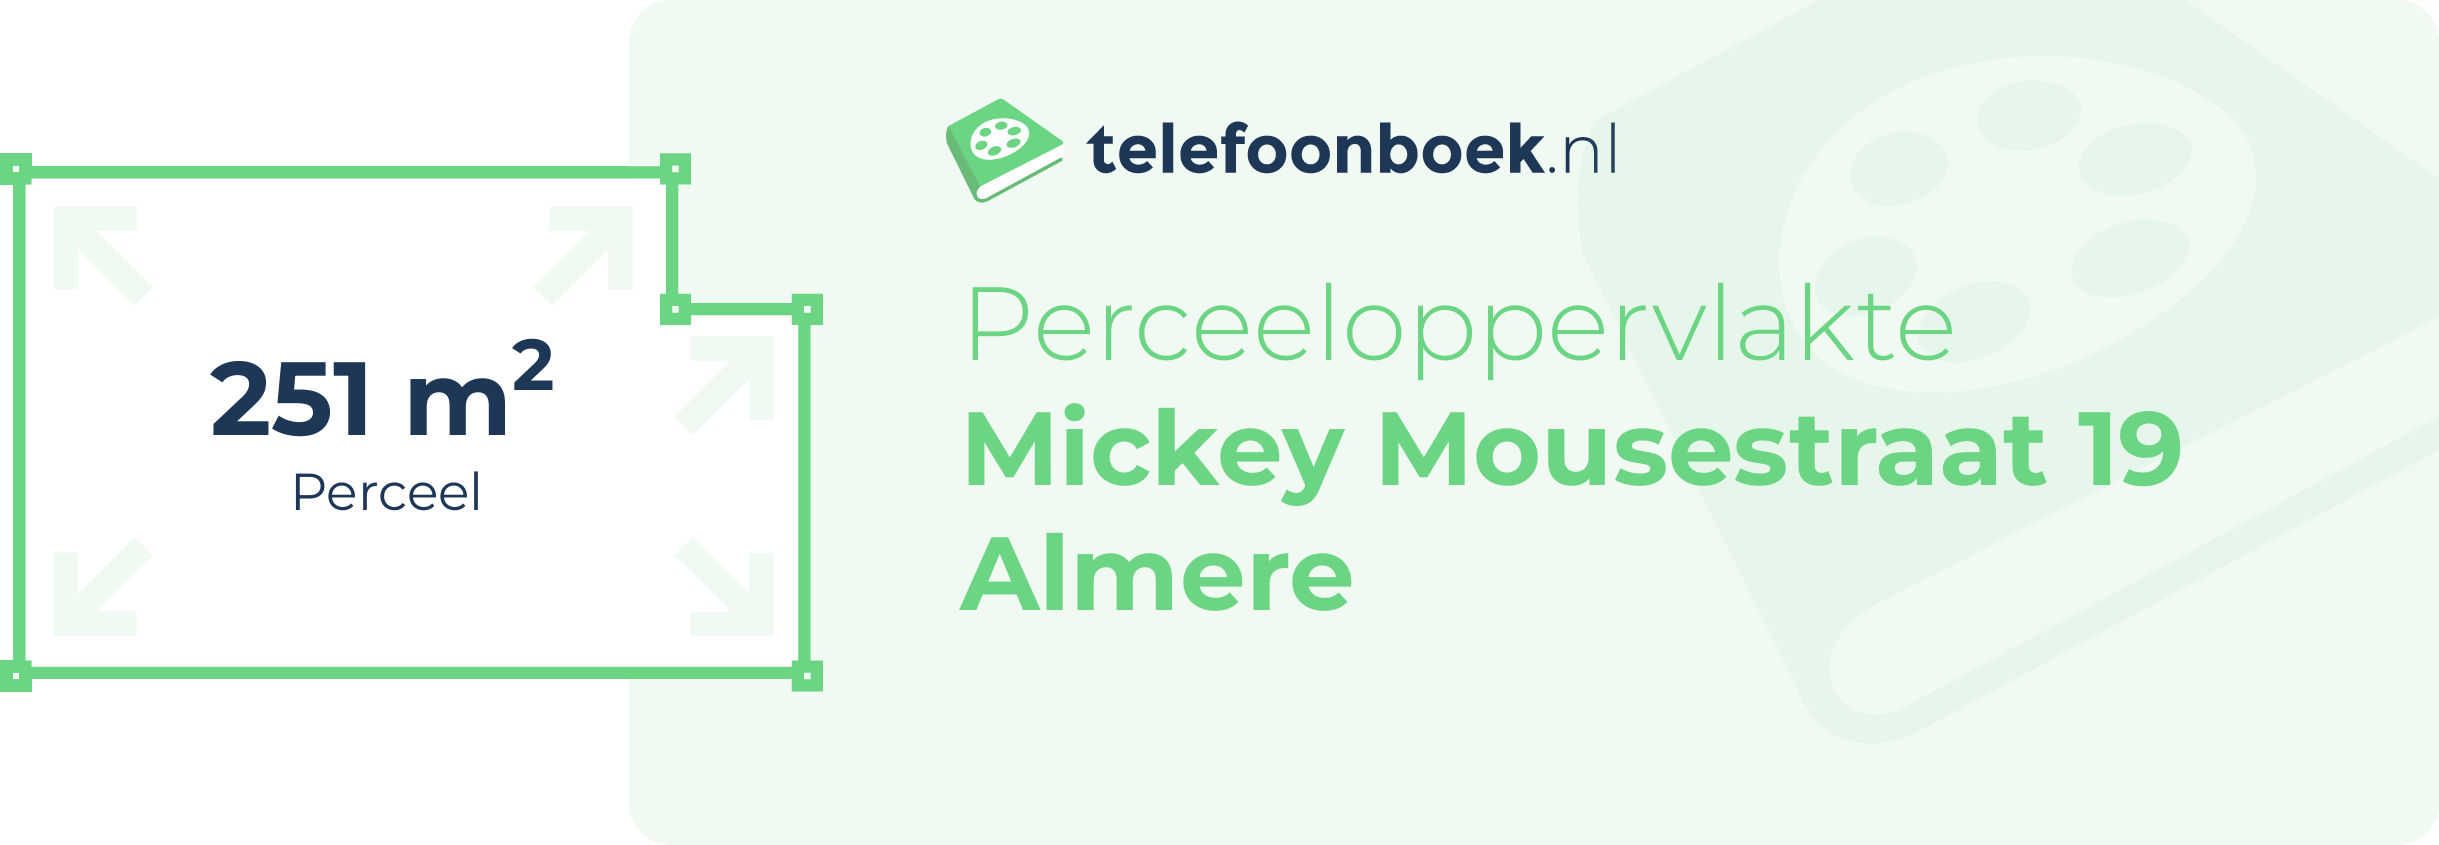 Perceeloppervlakte Mickey Mousestraat 19 Almere